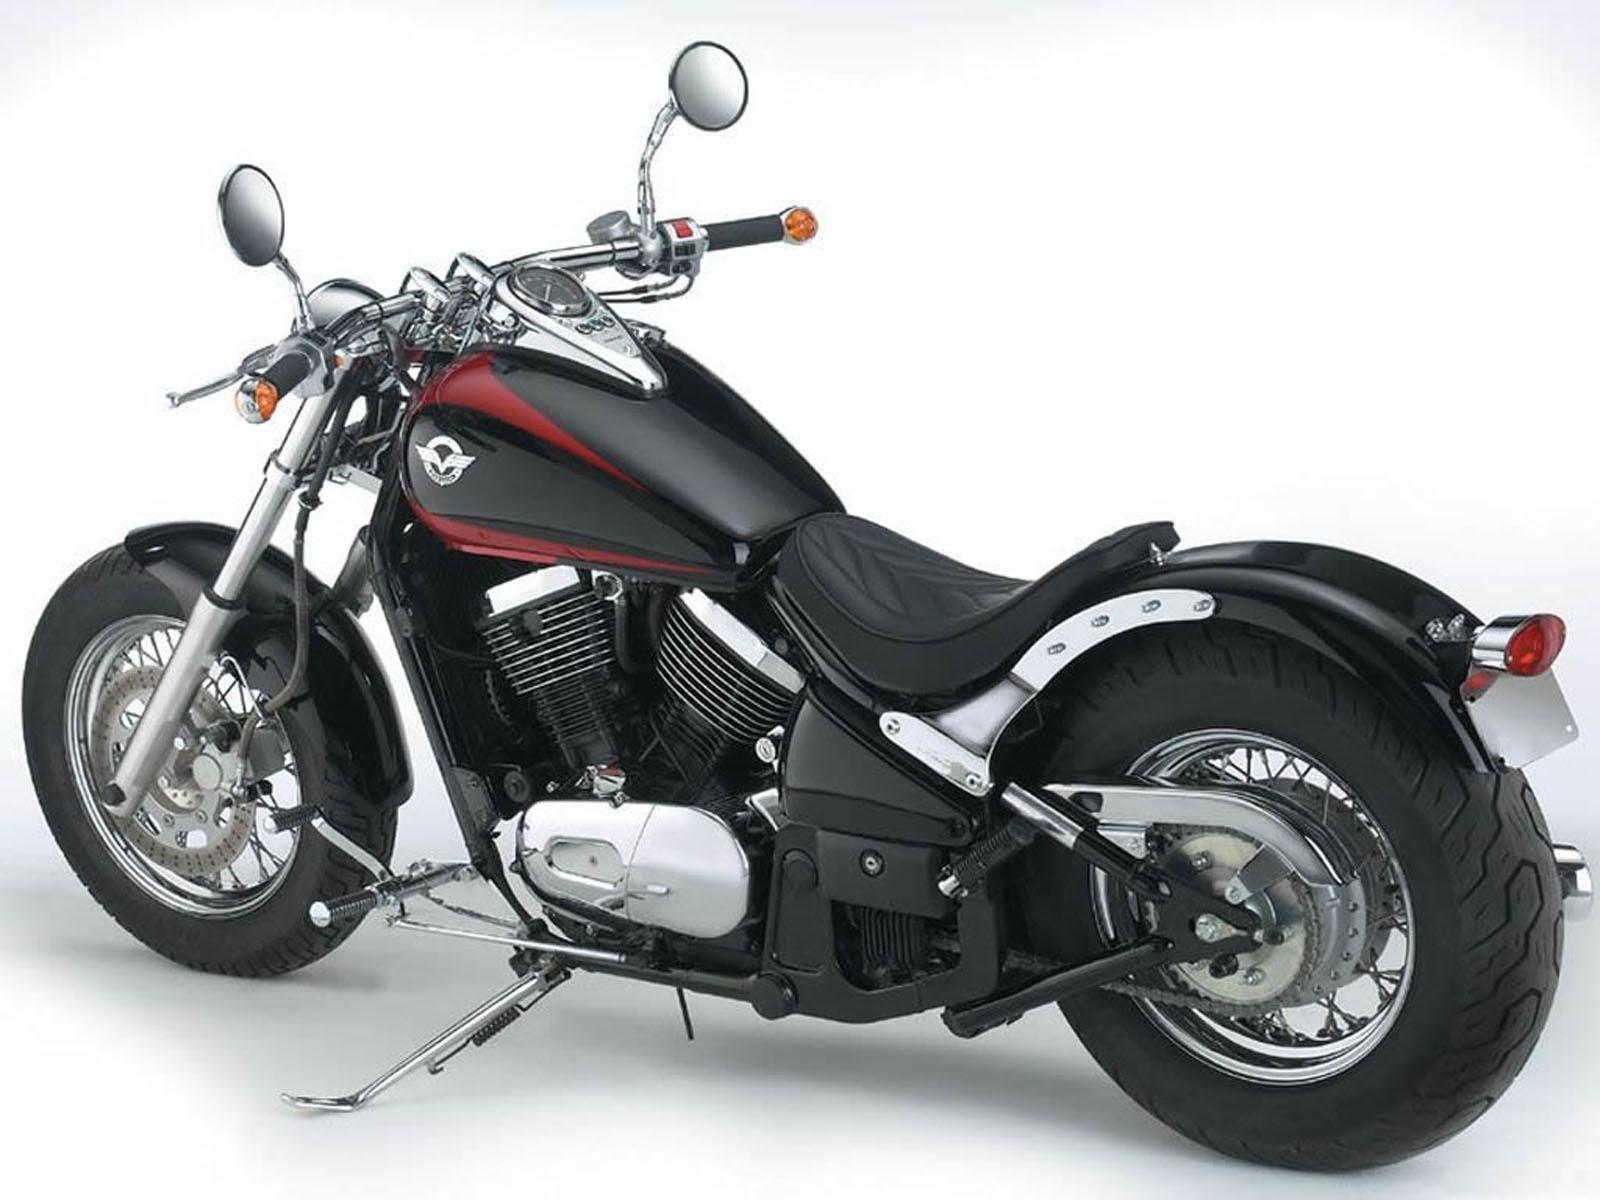 Wallpaper Harley Davidson Bikes